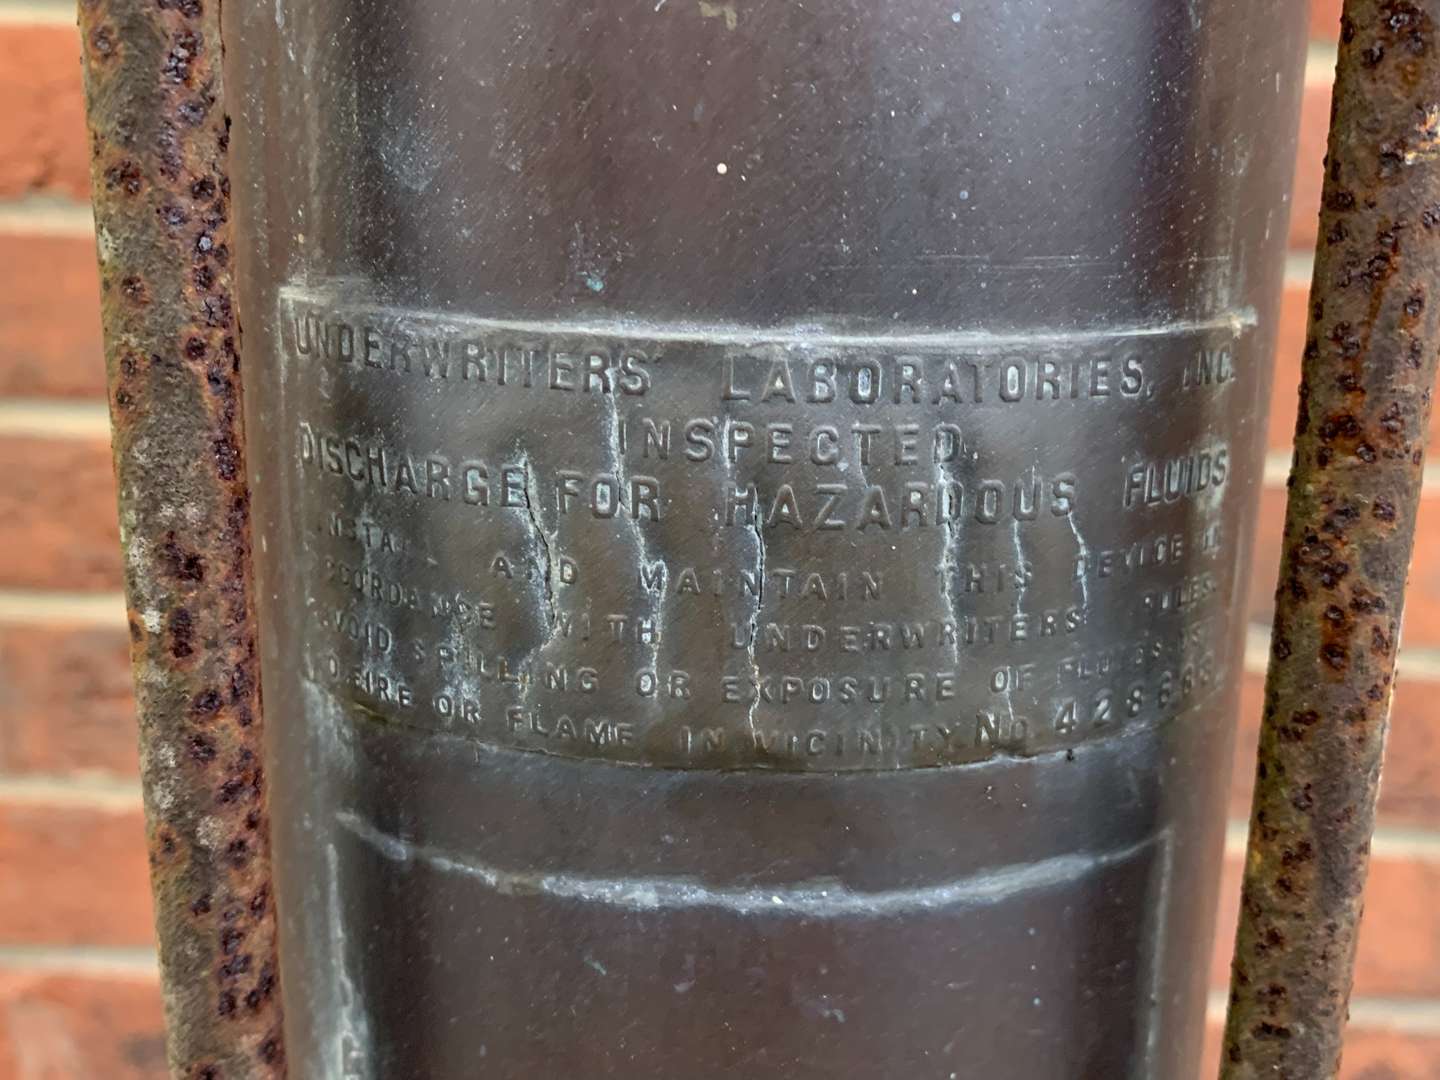 <p>Vintage Hand Cranked Petrol Pump</p>